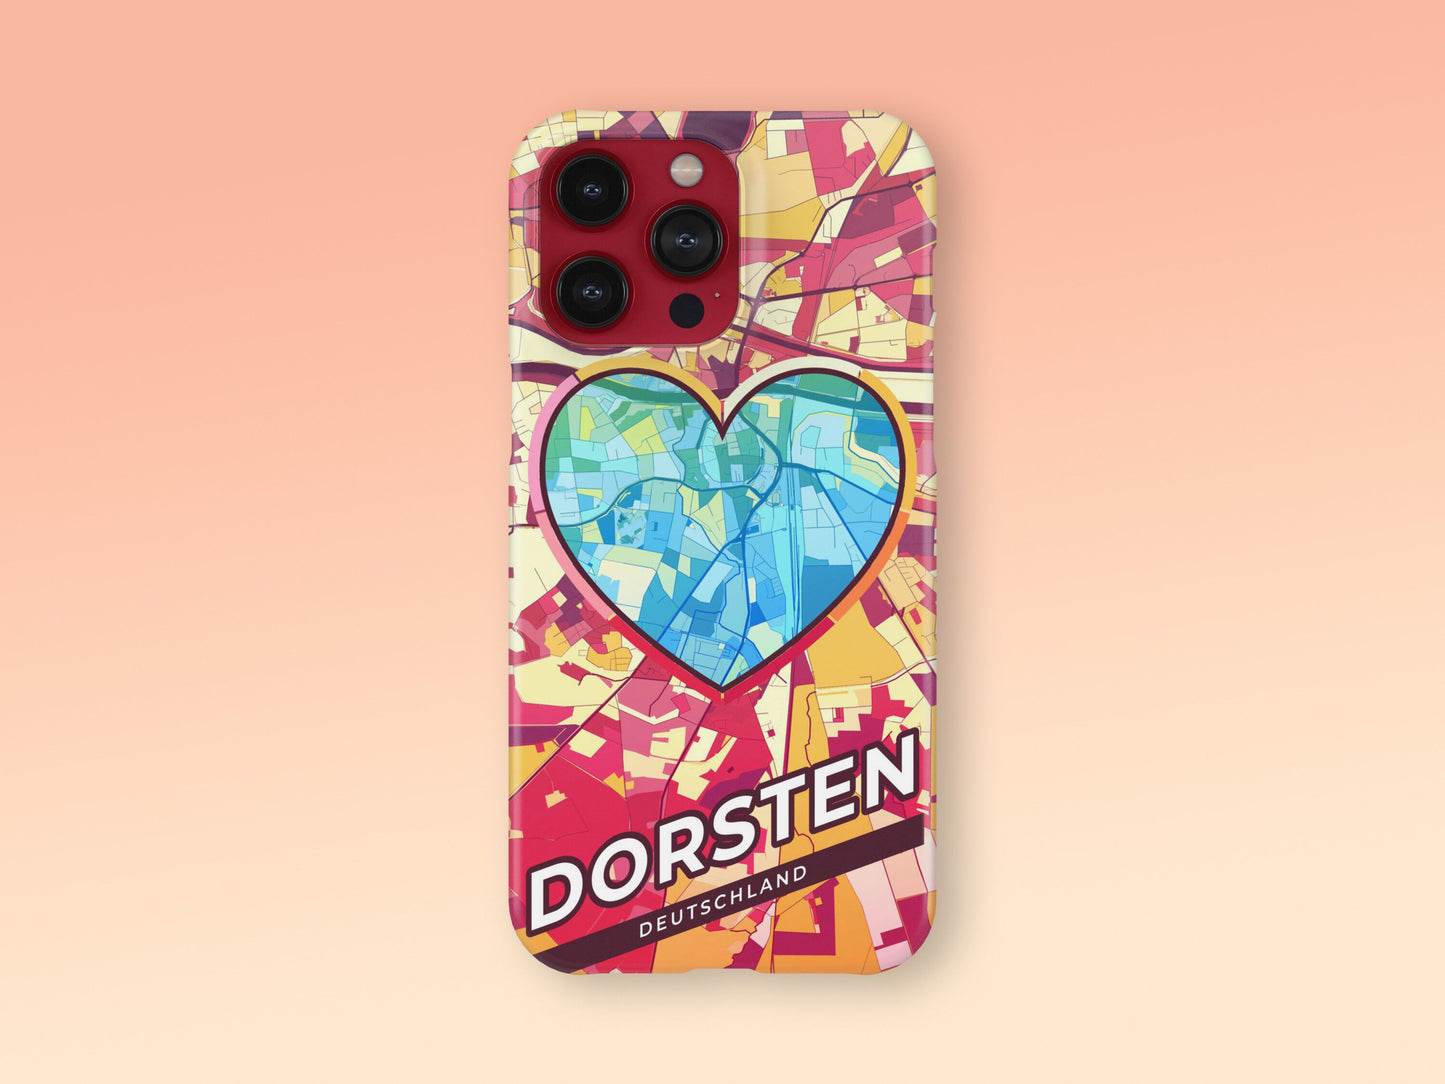 Dorsten Deutschland slim phone case with colorful icon. Birthday, wedding or housewarming gift. Couple match cases. 2